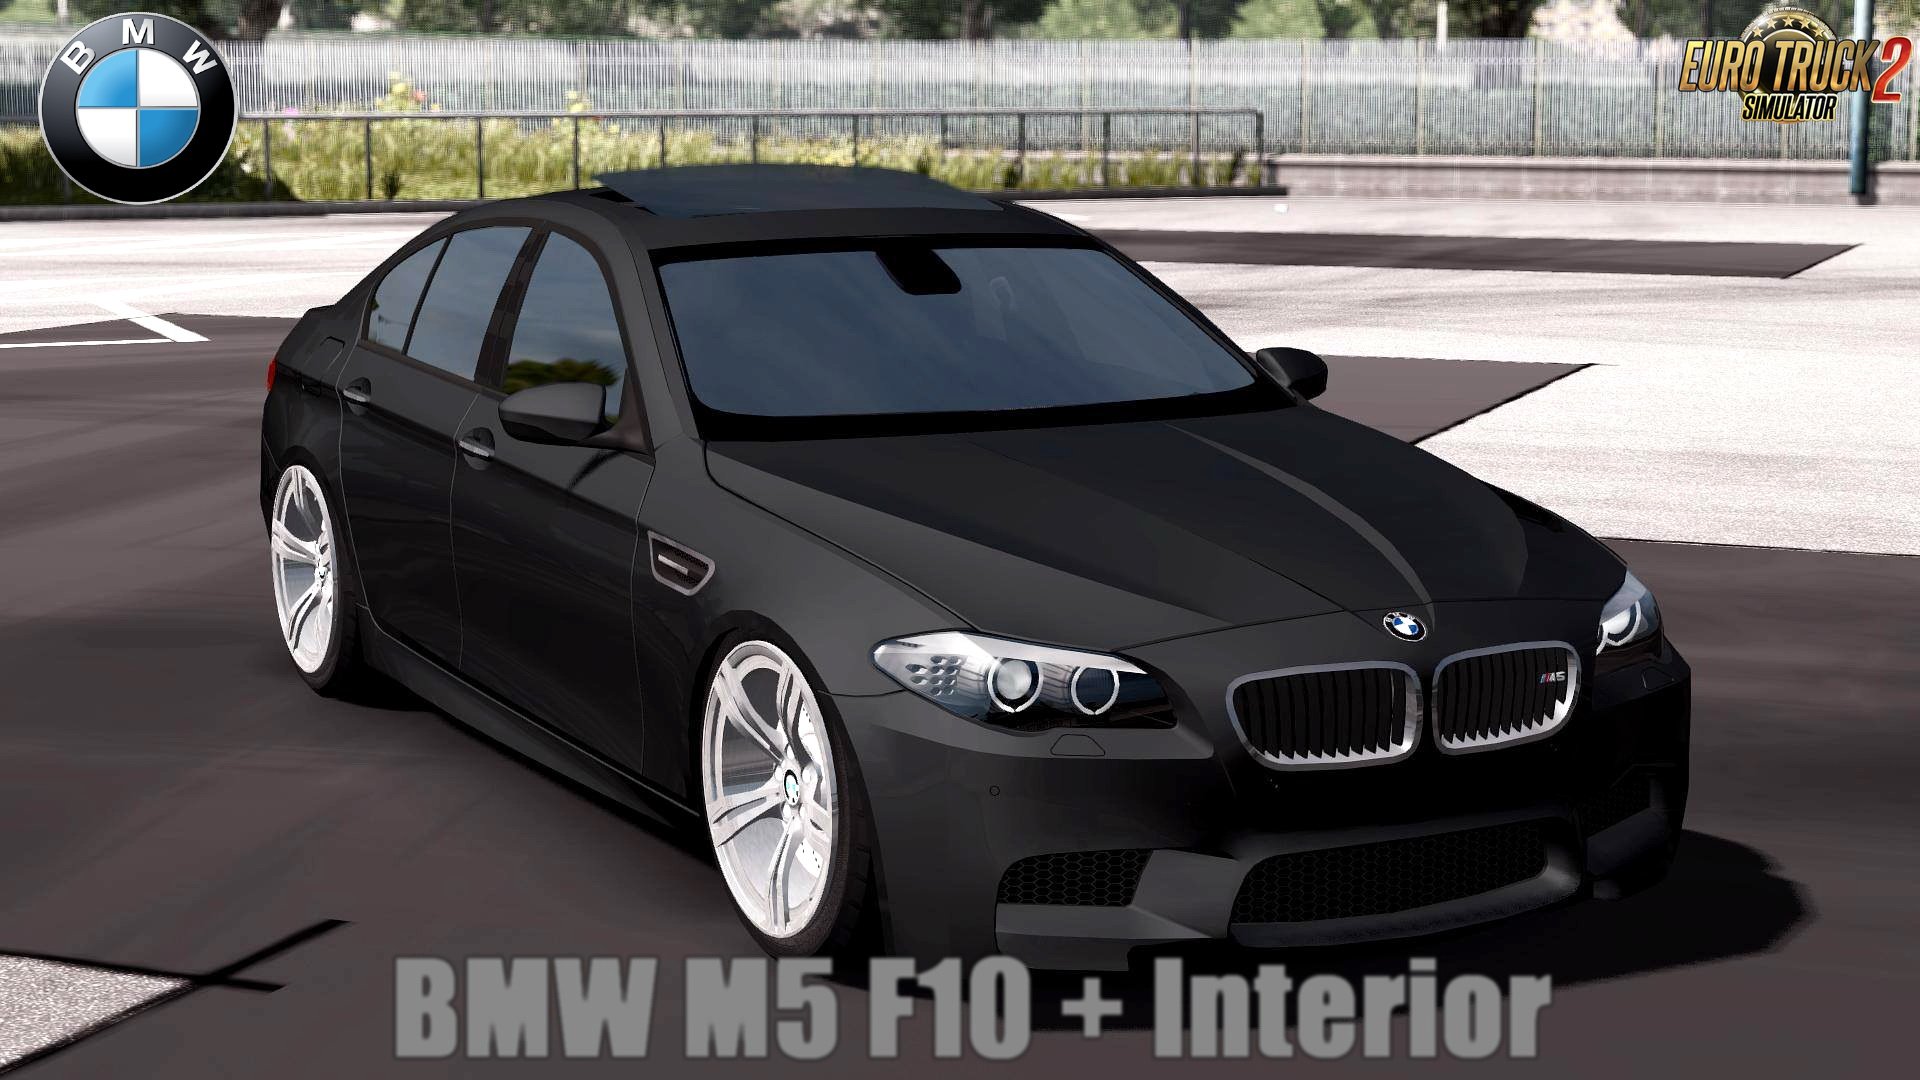 BMW M5 F10 + Interior v3.0 (Upgraded) (1.28.x)